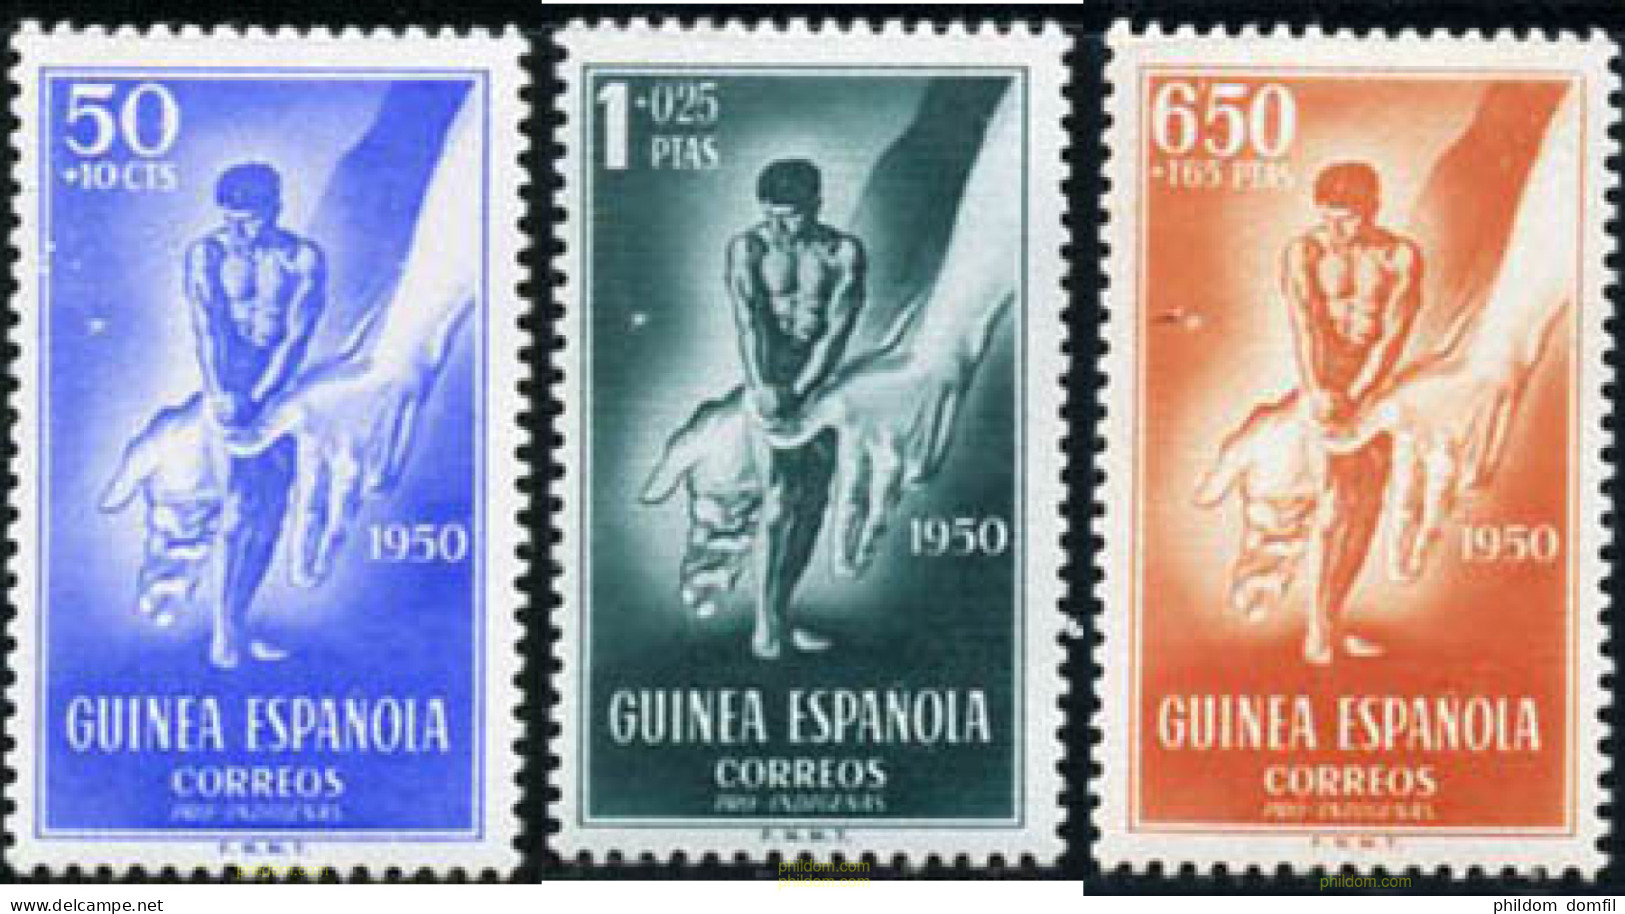 198490 MNH GUINEA ESPAÑOLA 1950 PRO INDIGENAS - Guinée Espagnole